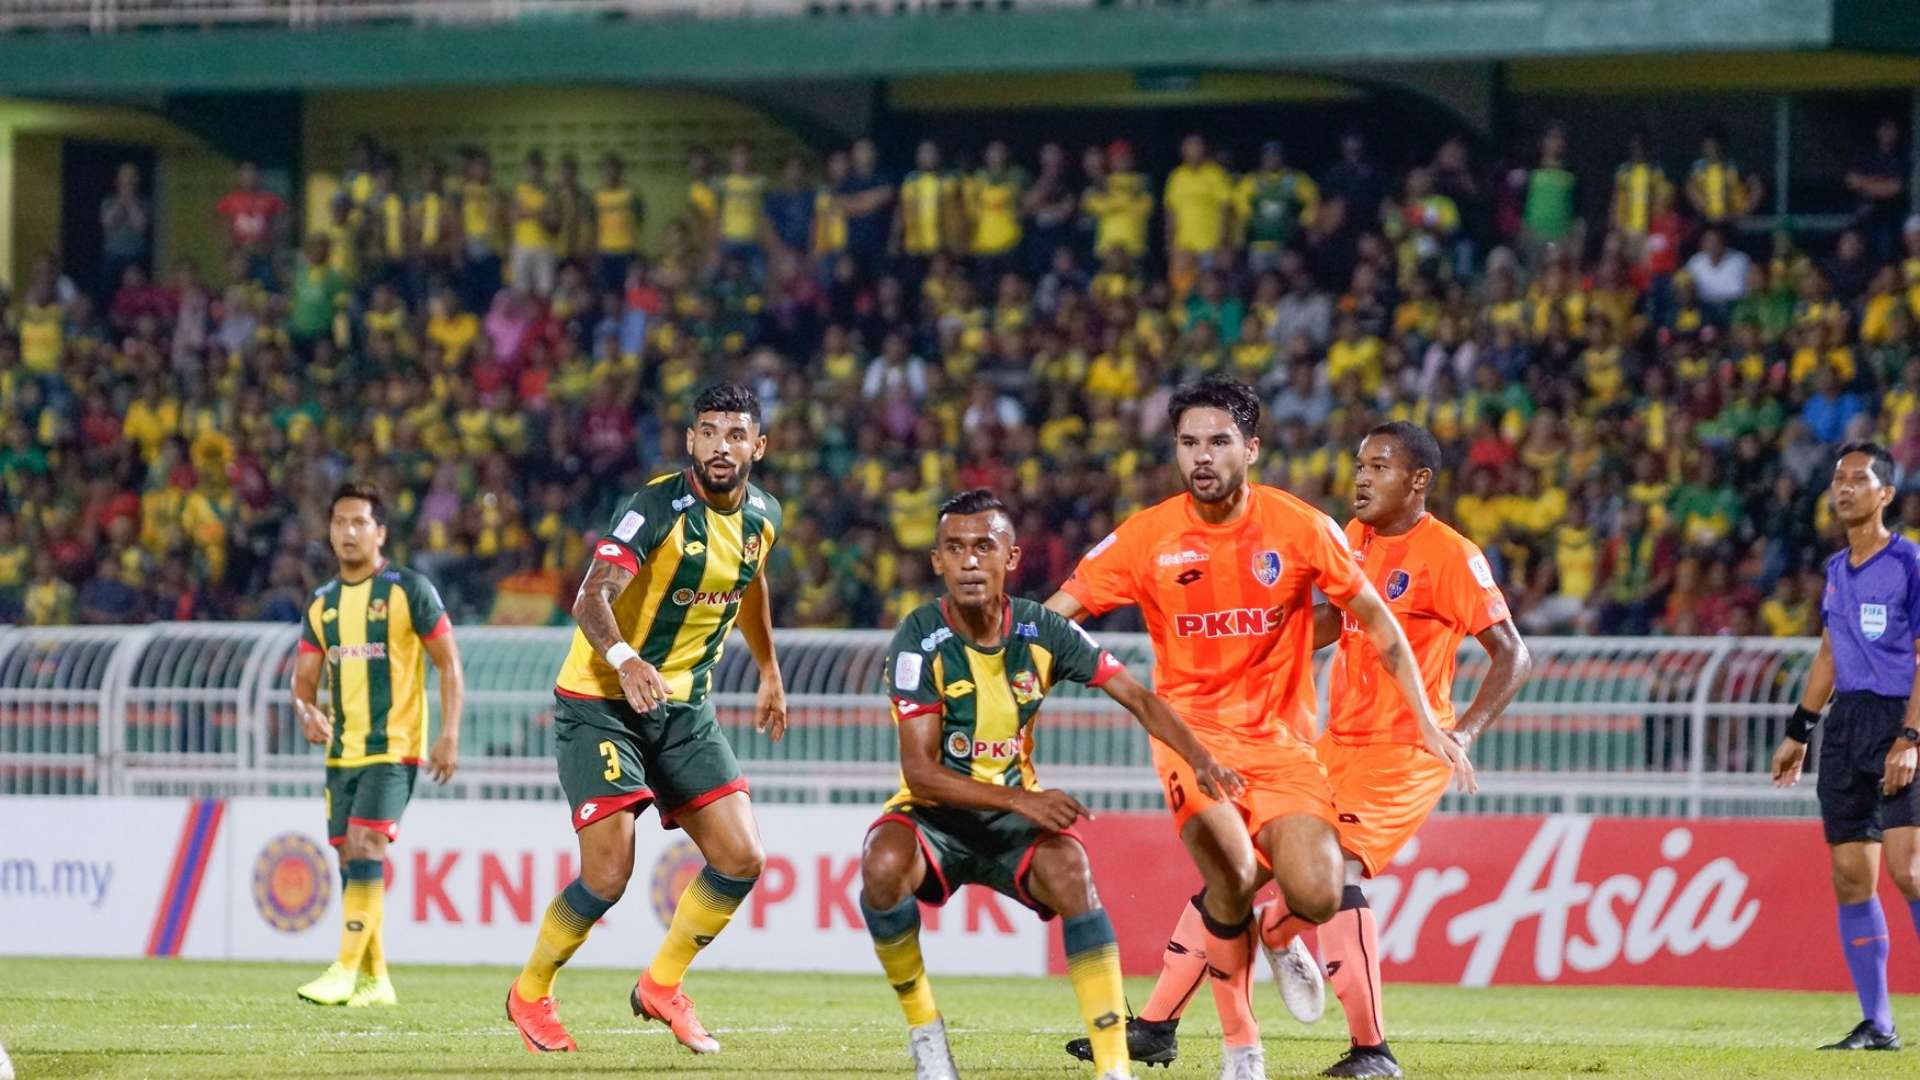 Shakir Hamzah, Nicholas Swirad, Kedah v PKNS, Super League, 2 Mar 2019